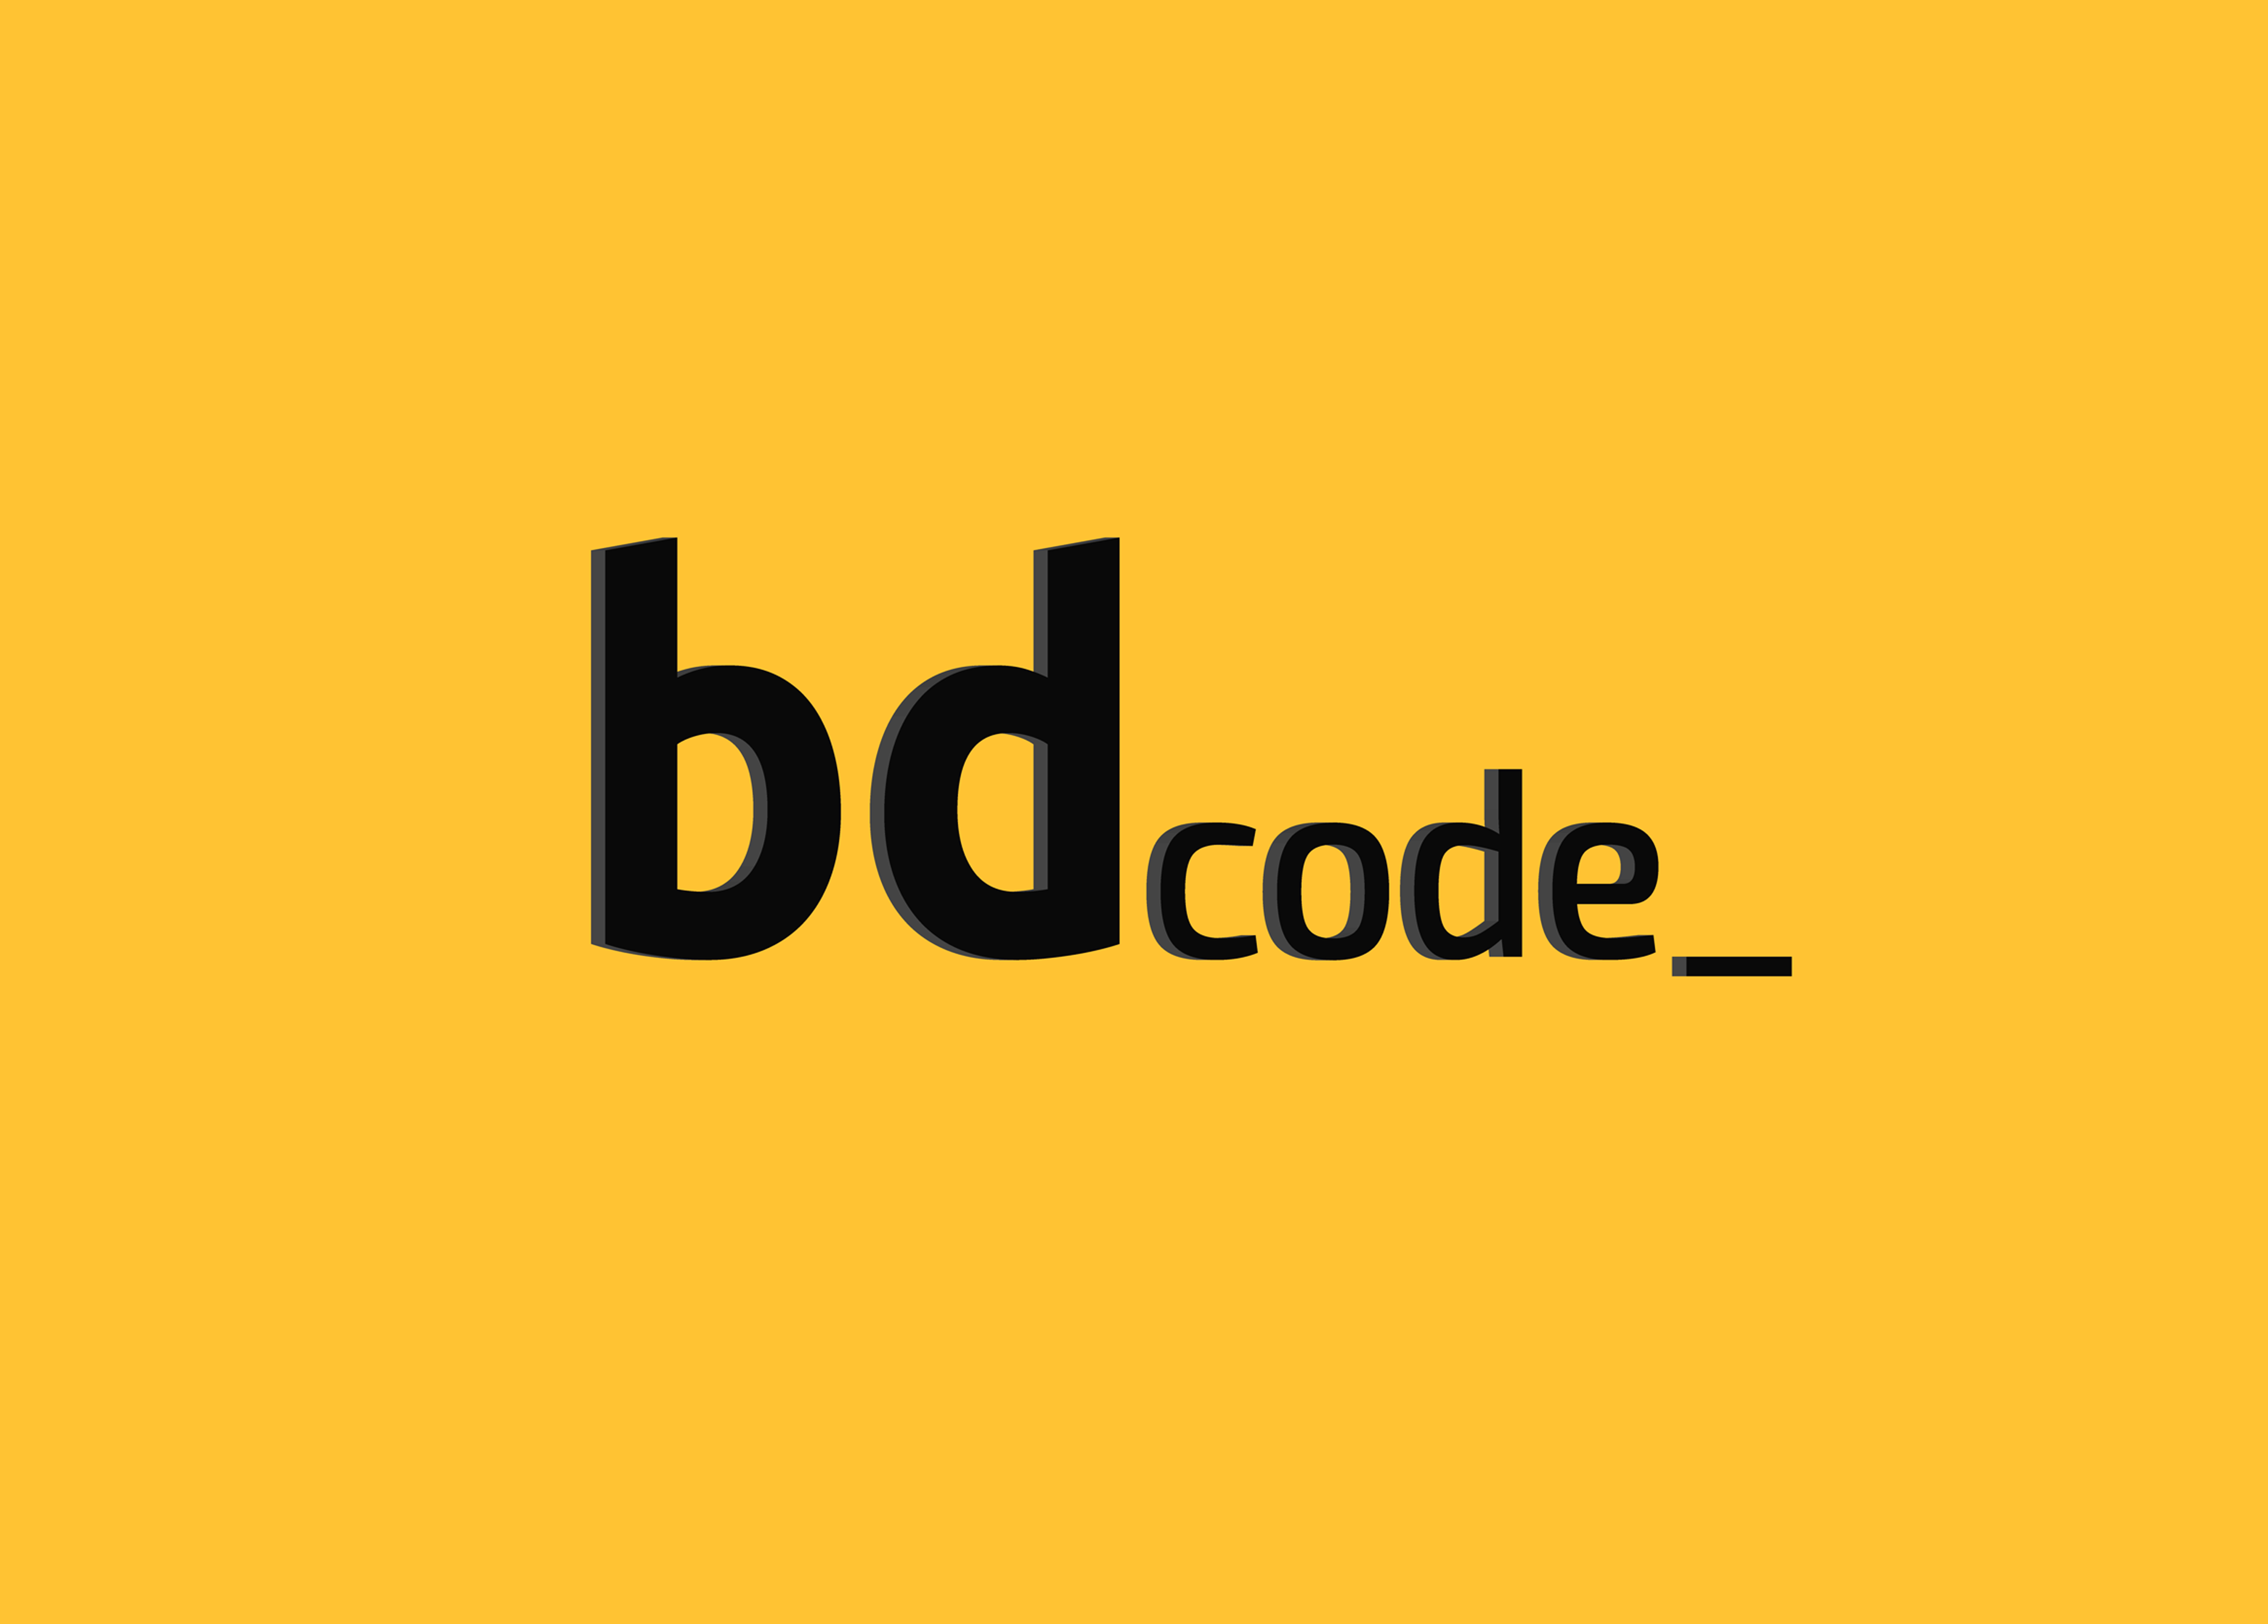 bdcode